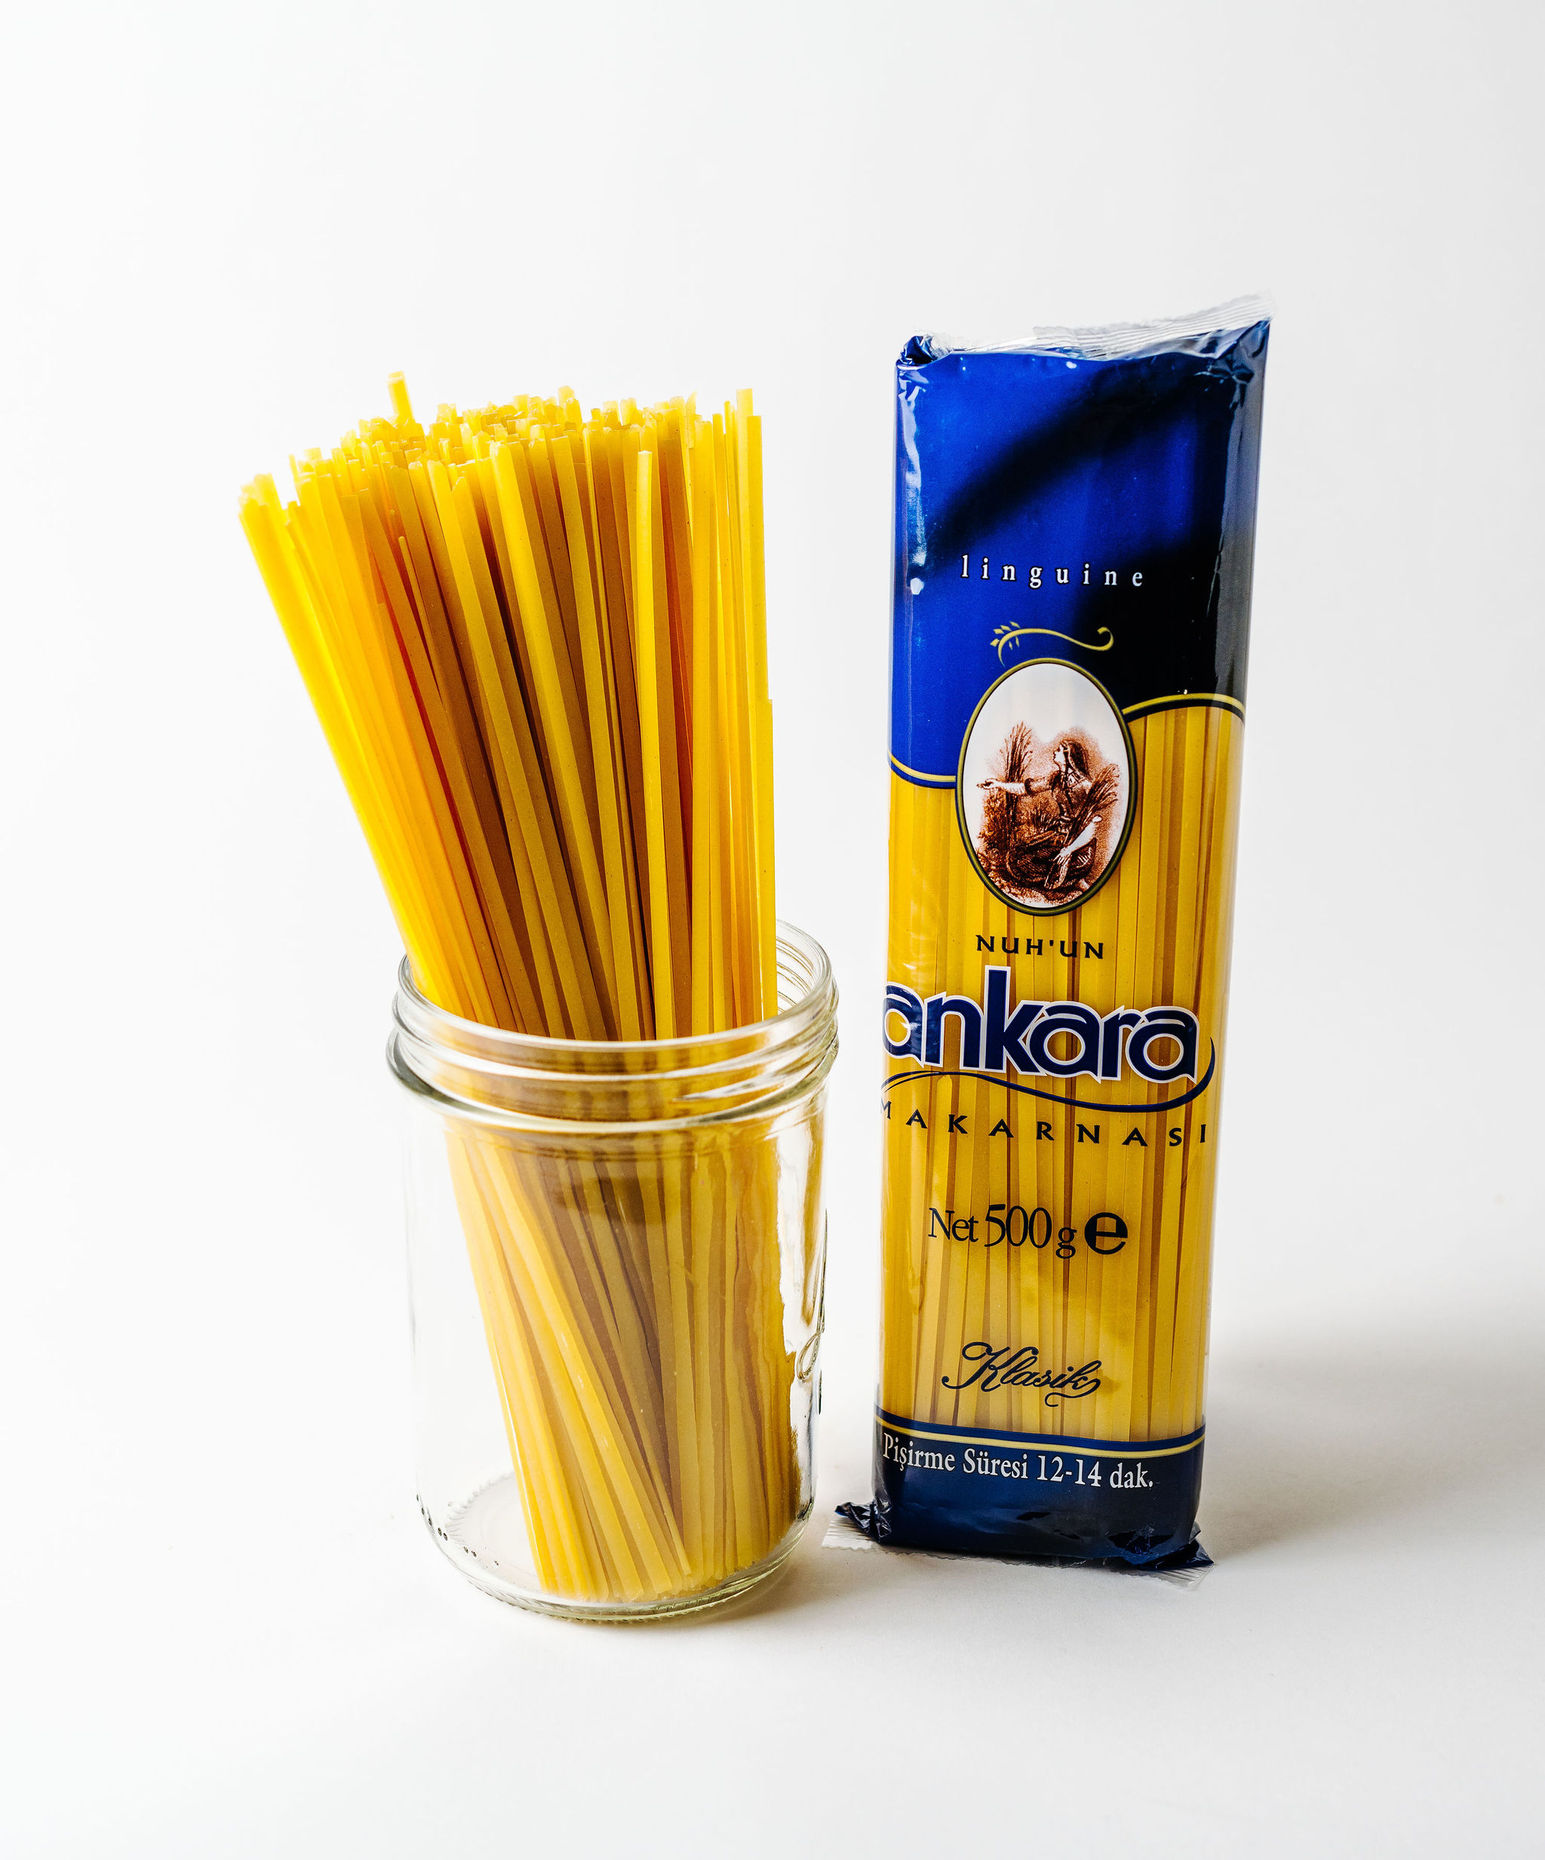 Ankara Spaghetti Linguine 